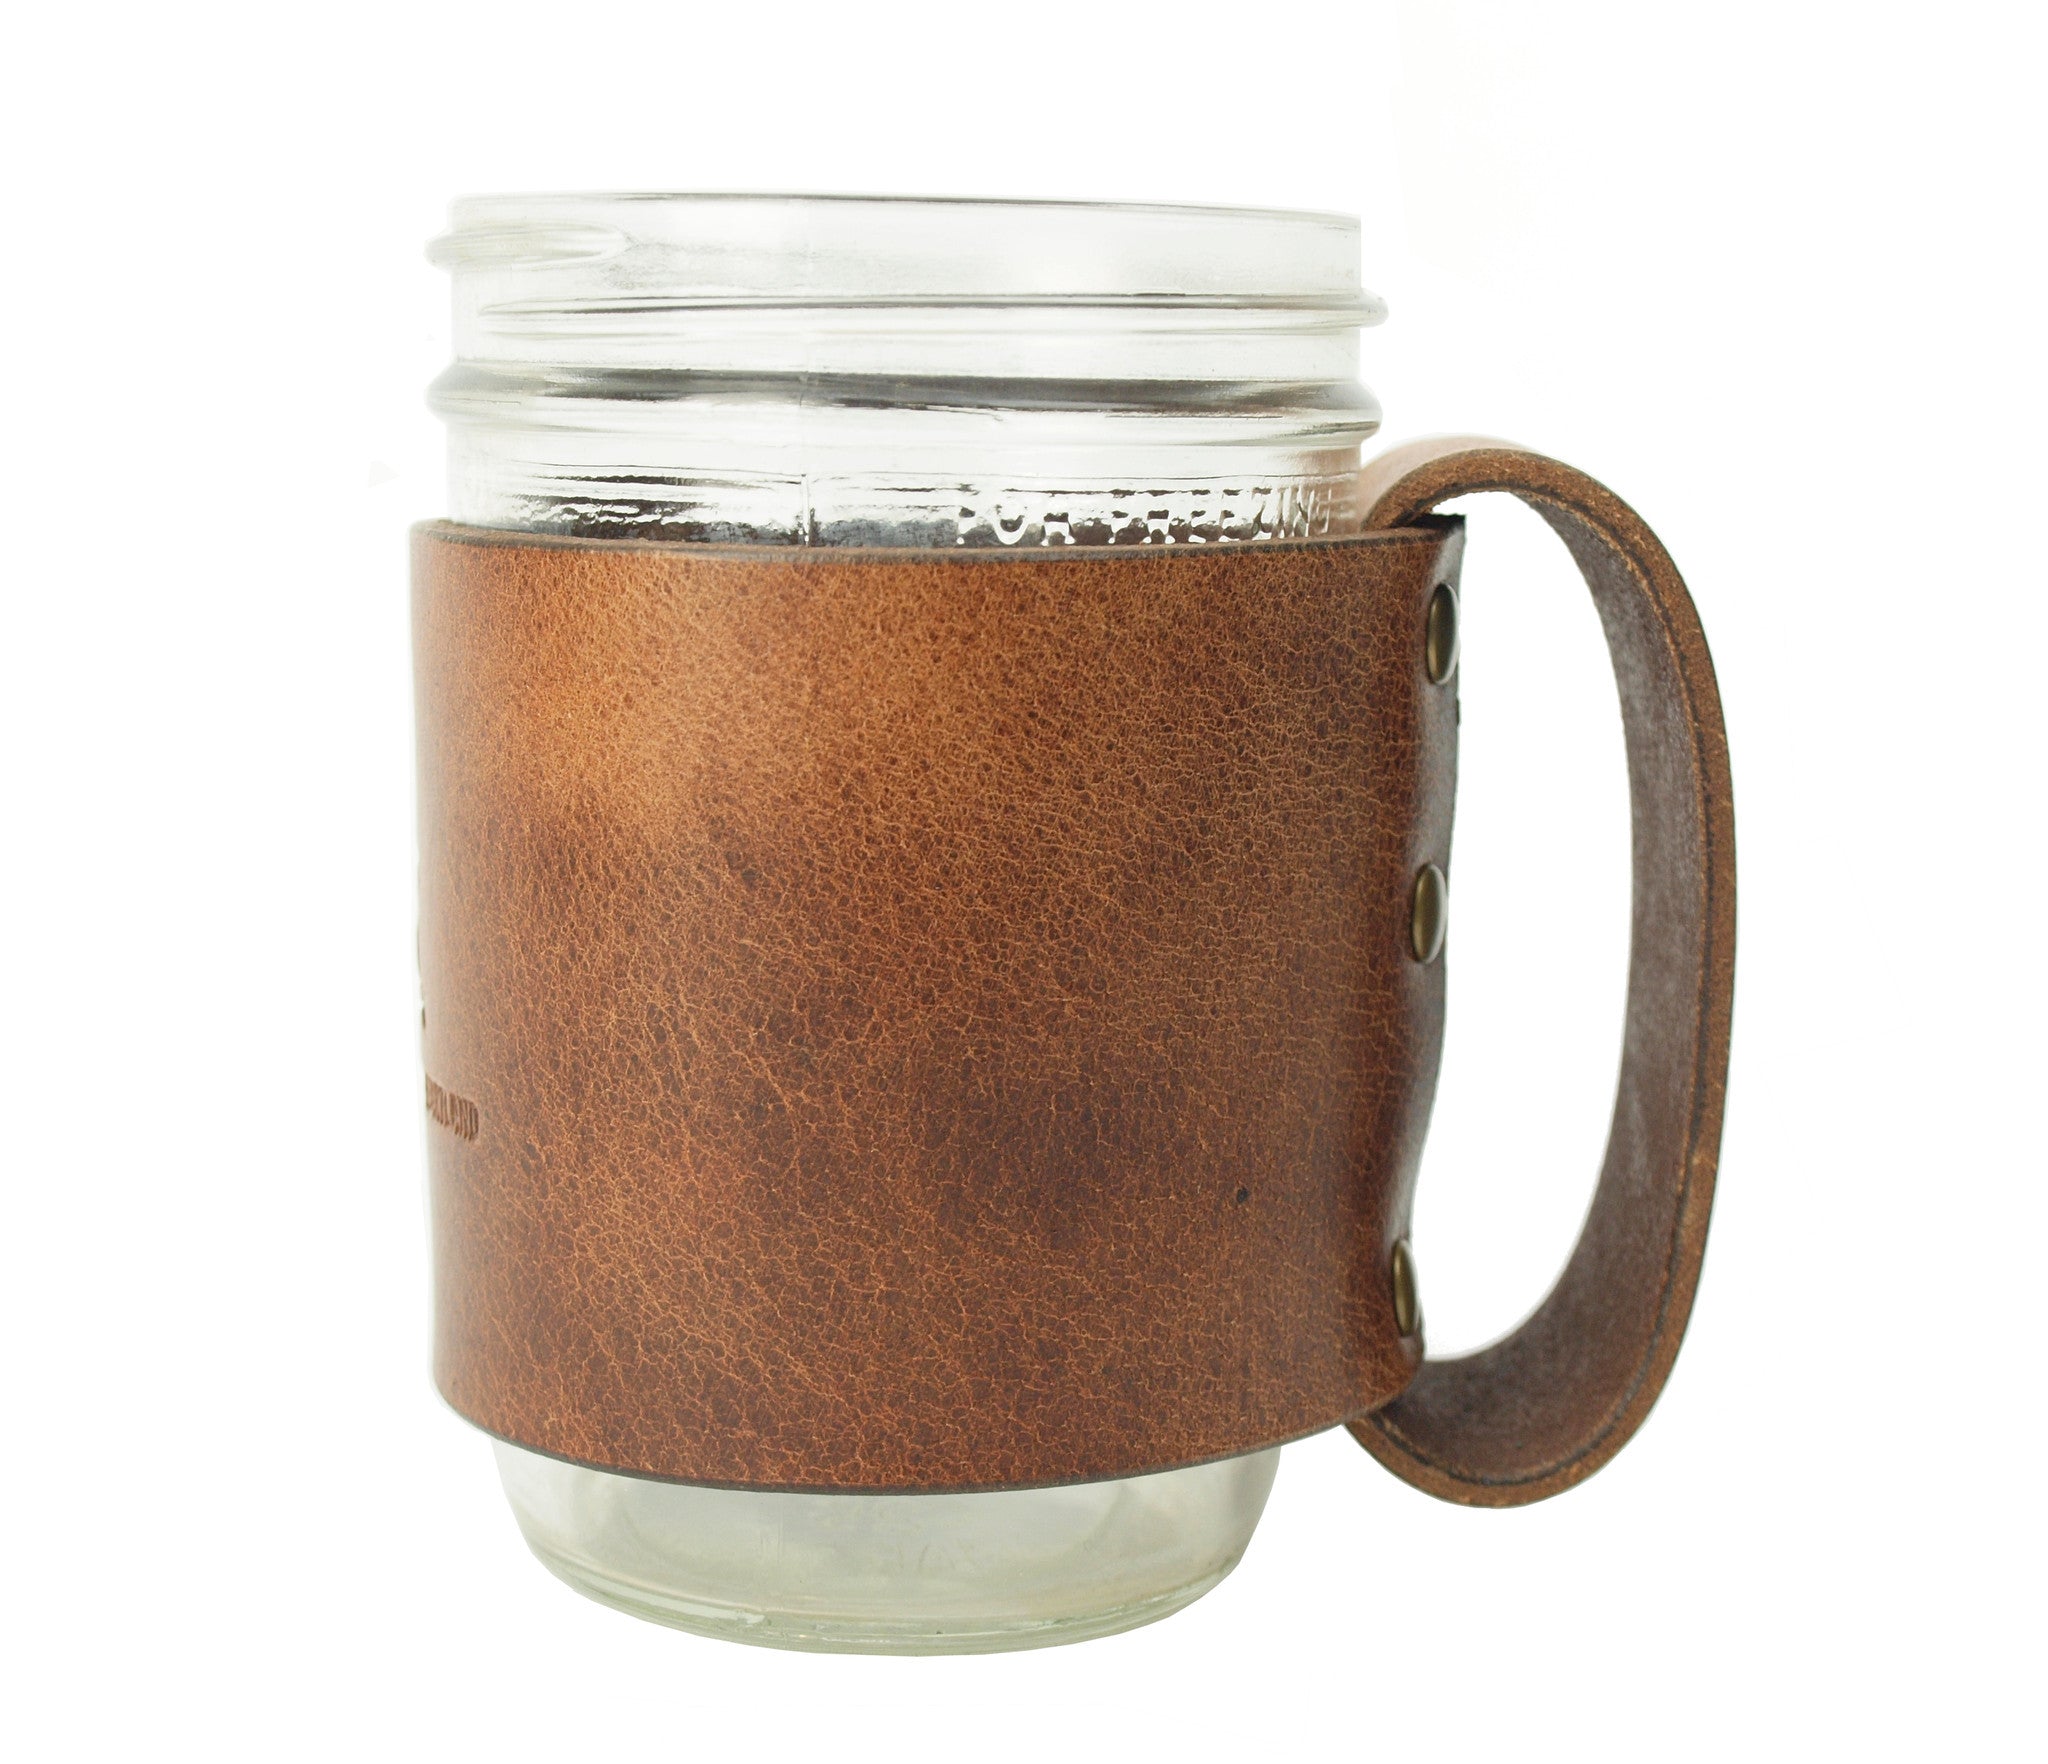 Mason Jar Coffee Cup